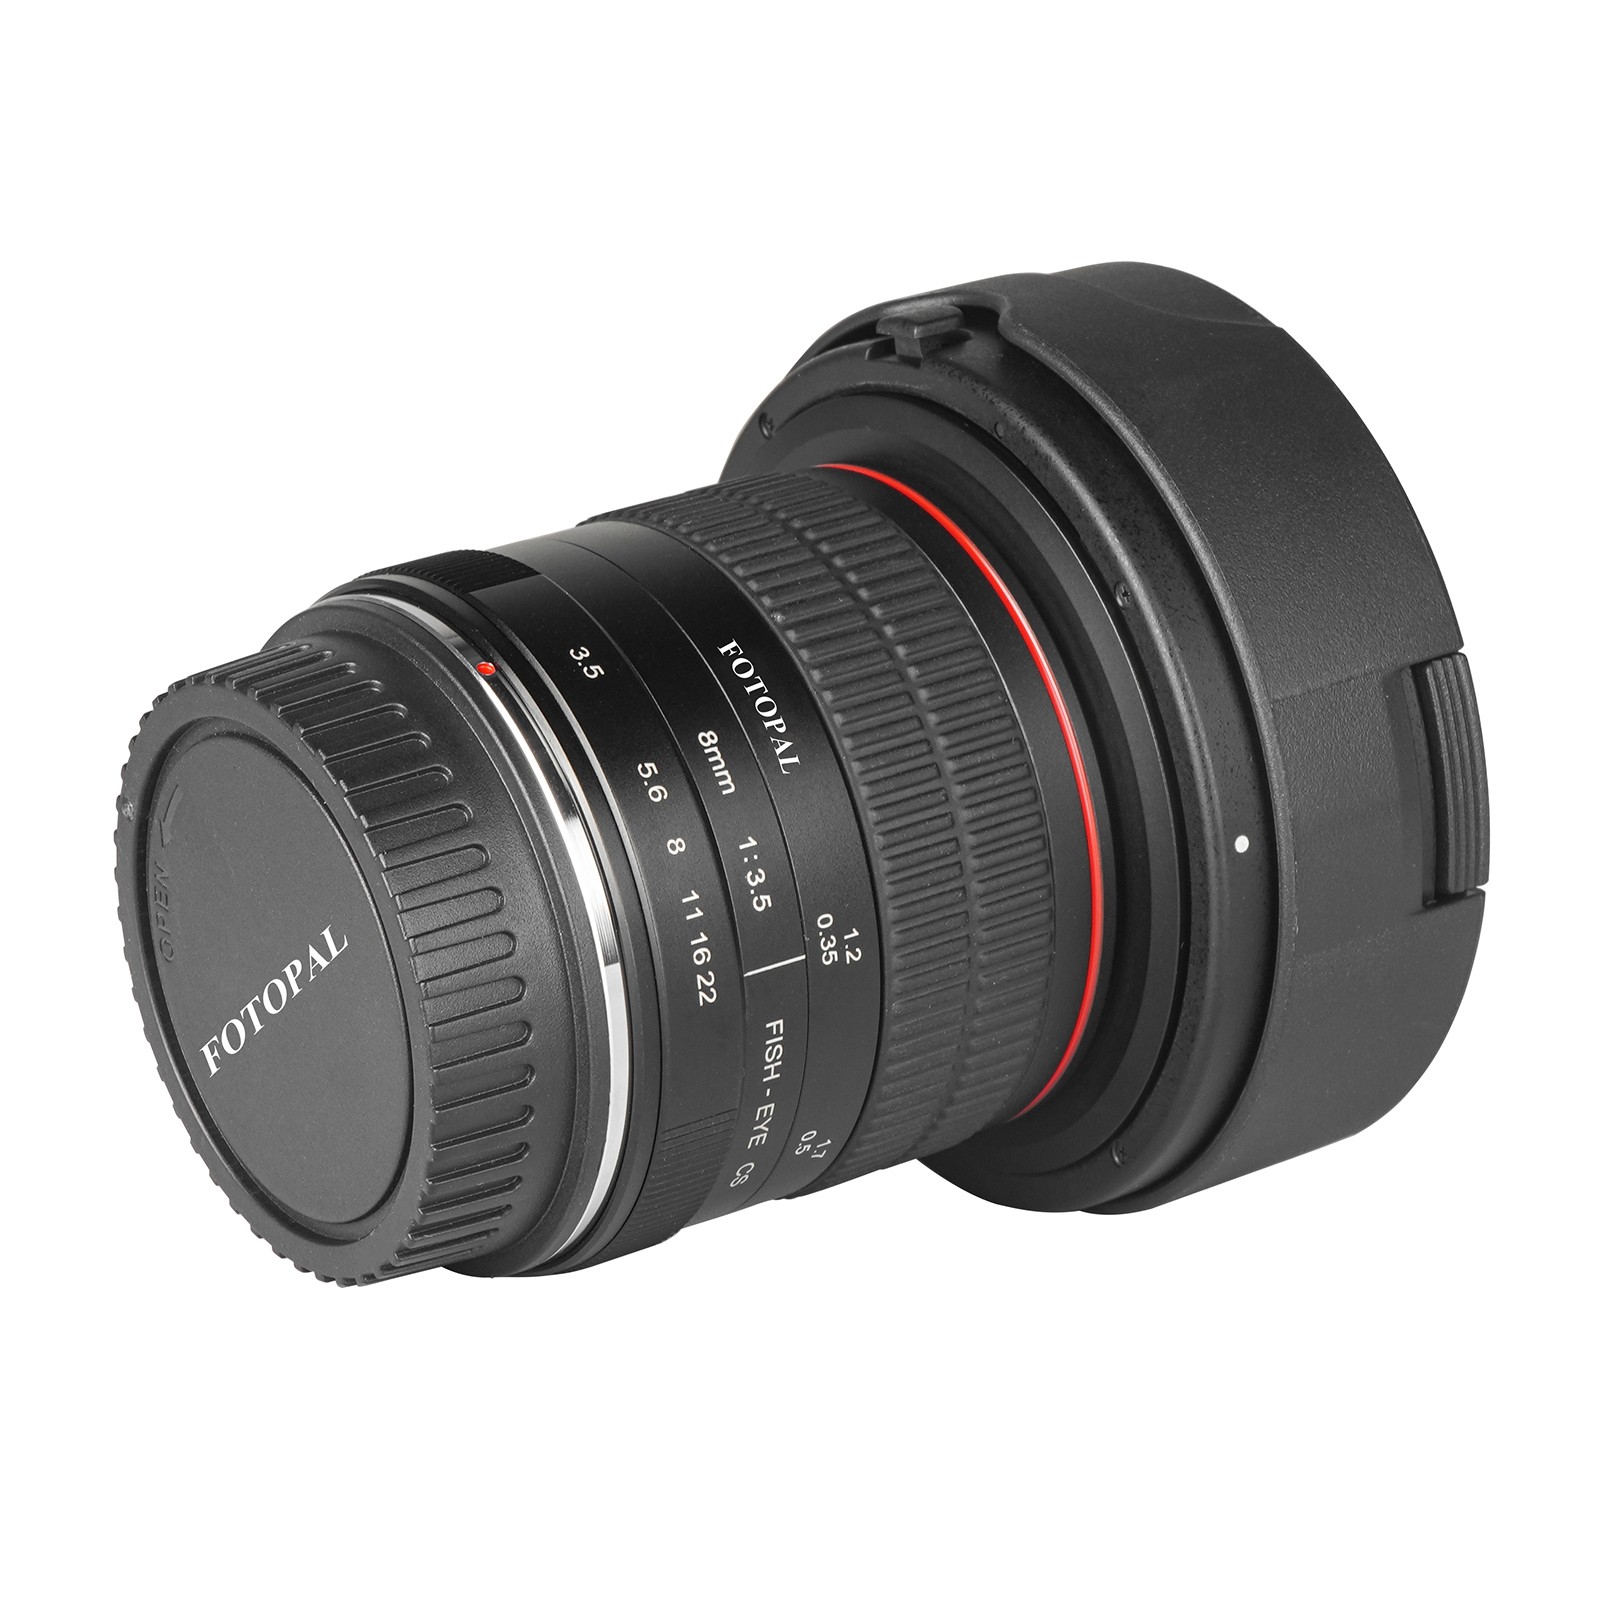 FOTOPAL 8mm f/3.5 Wide Angle Fisheye Lens